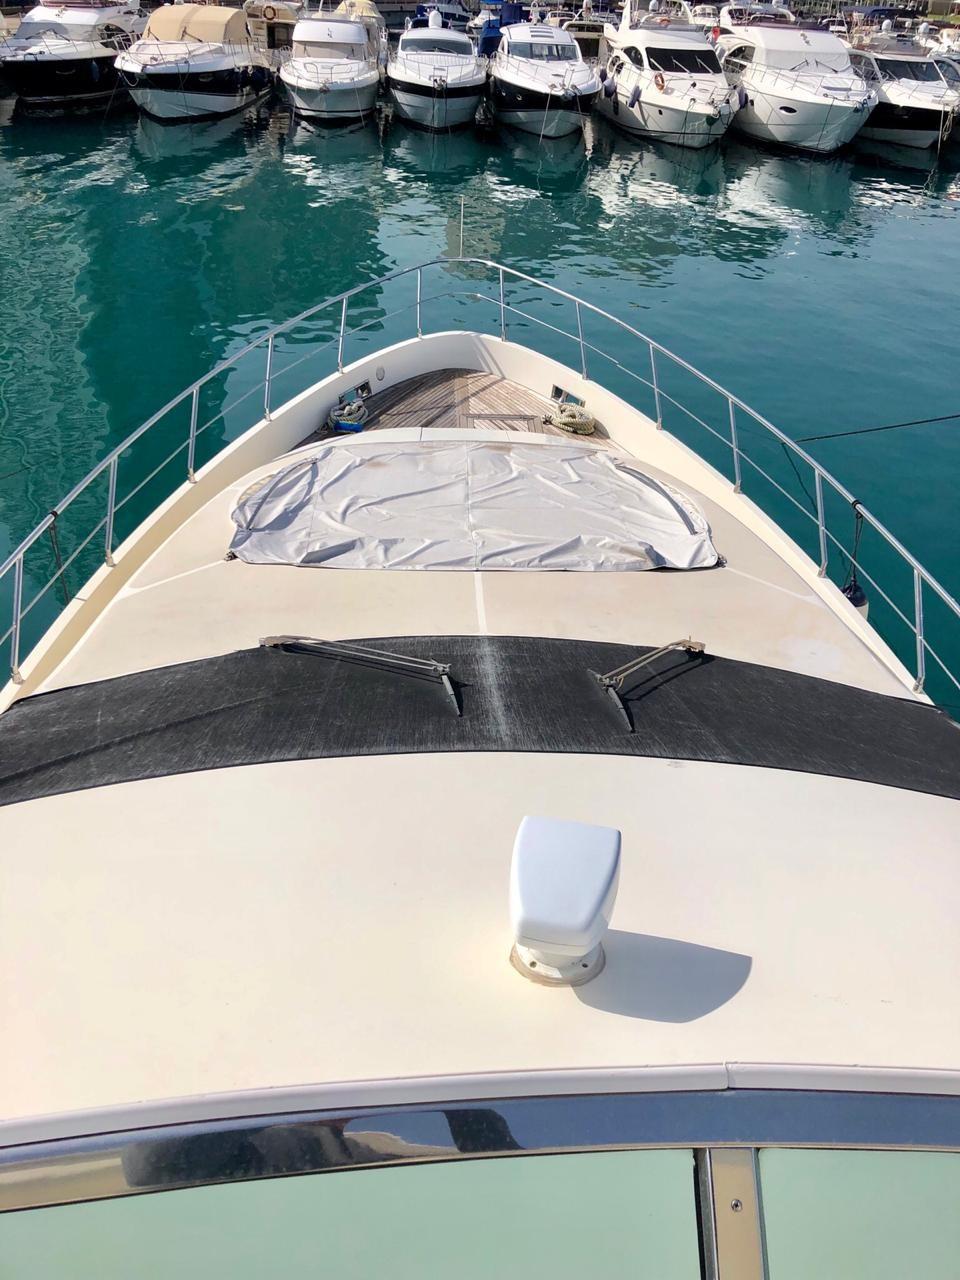 luxury yachts in lebanon